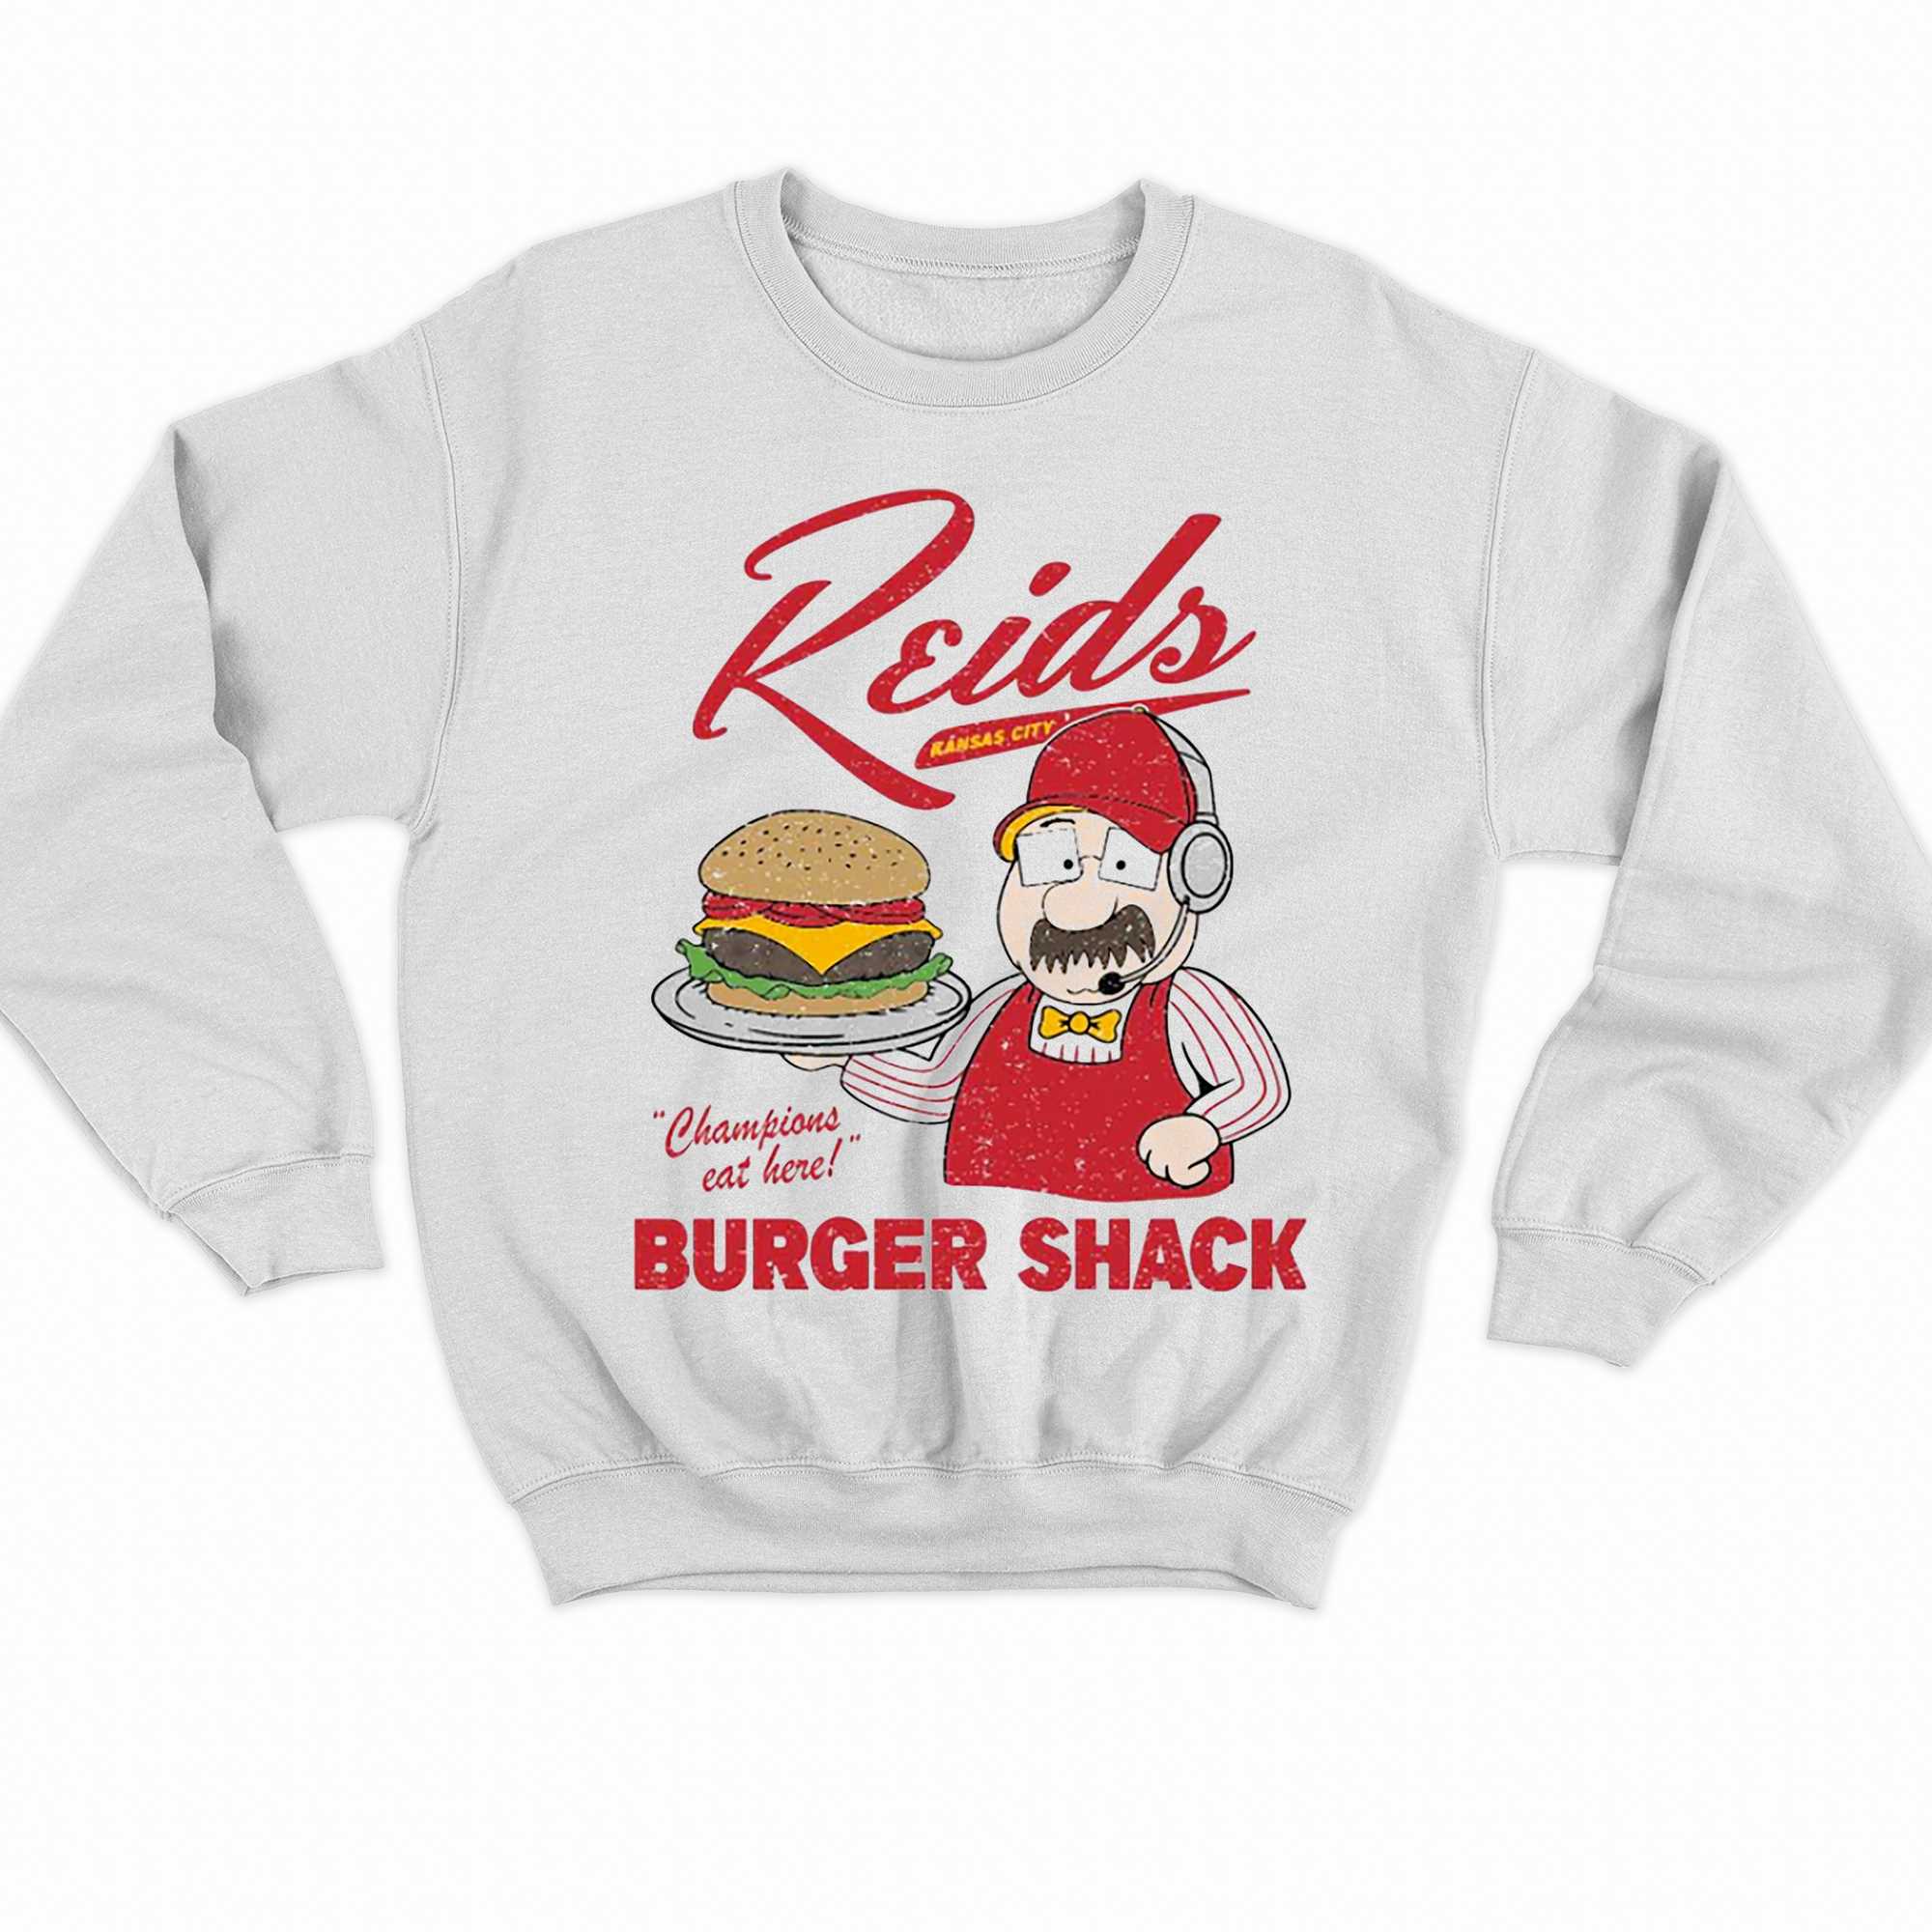 Champions Eat Here Keids Burger Shack Shirt 